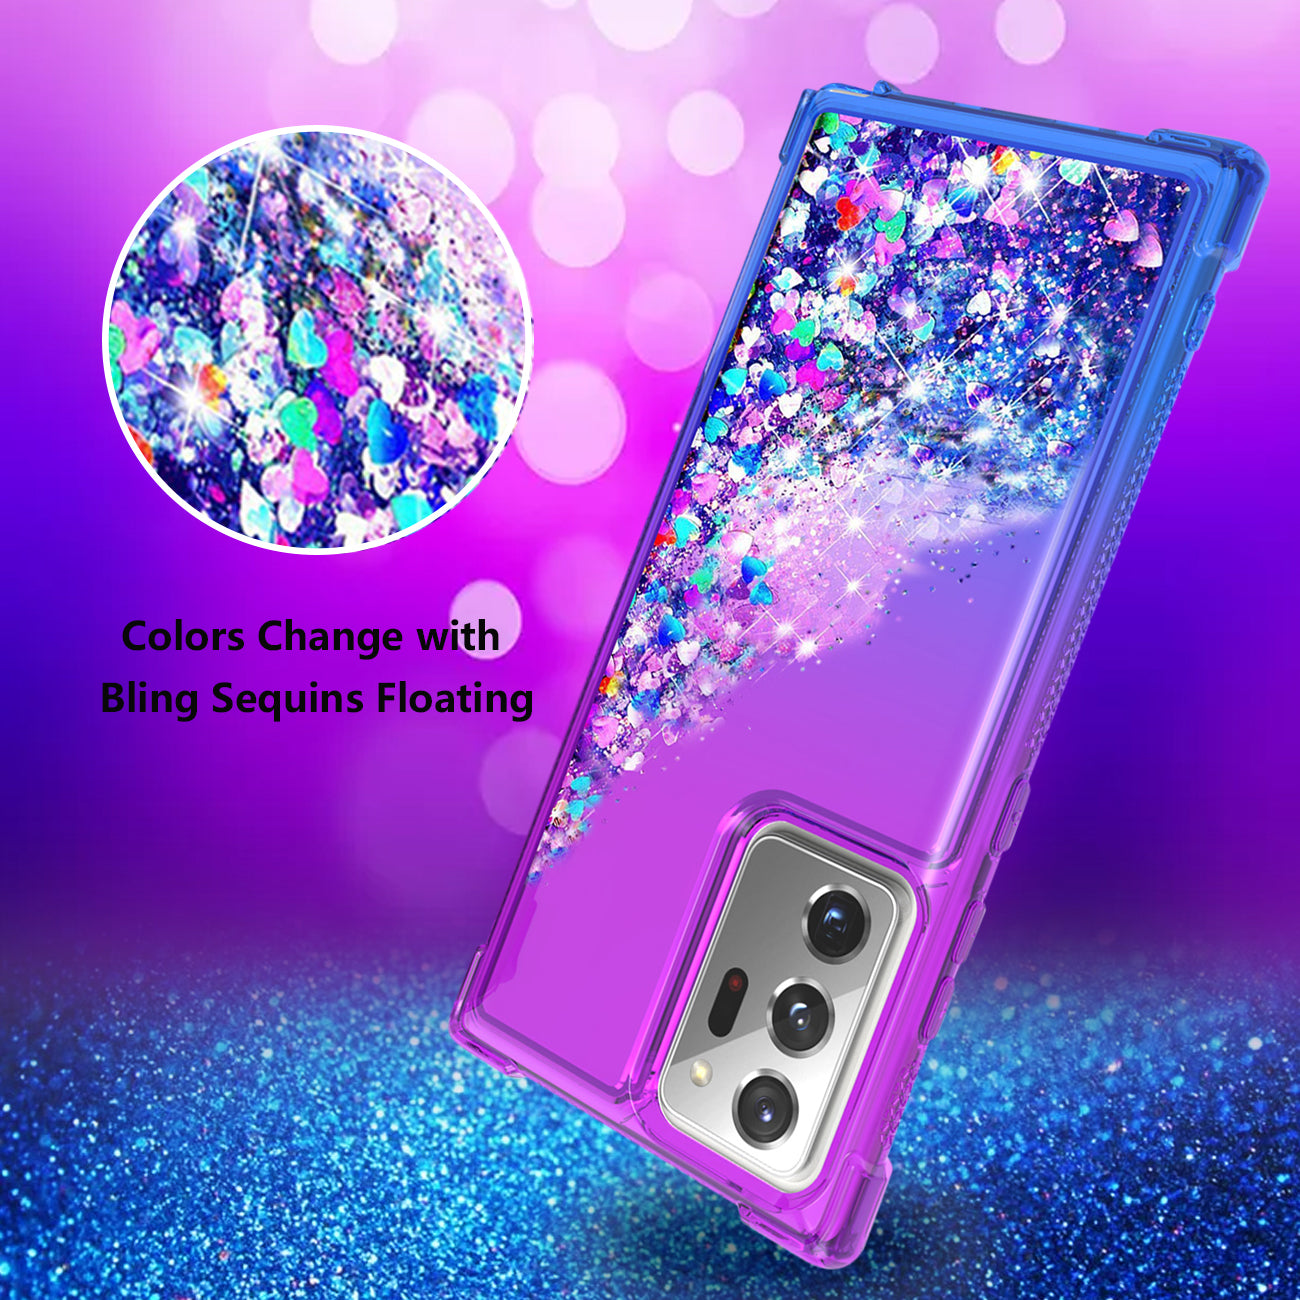 Case Bumper Shiny Flowing Glitter Liquid Samsung Galaxy Note 20 Ultra Purple Color